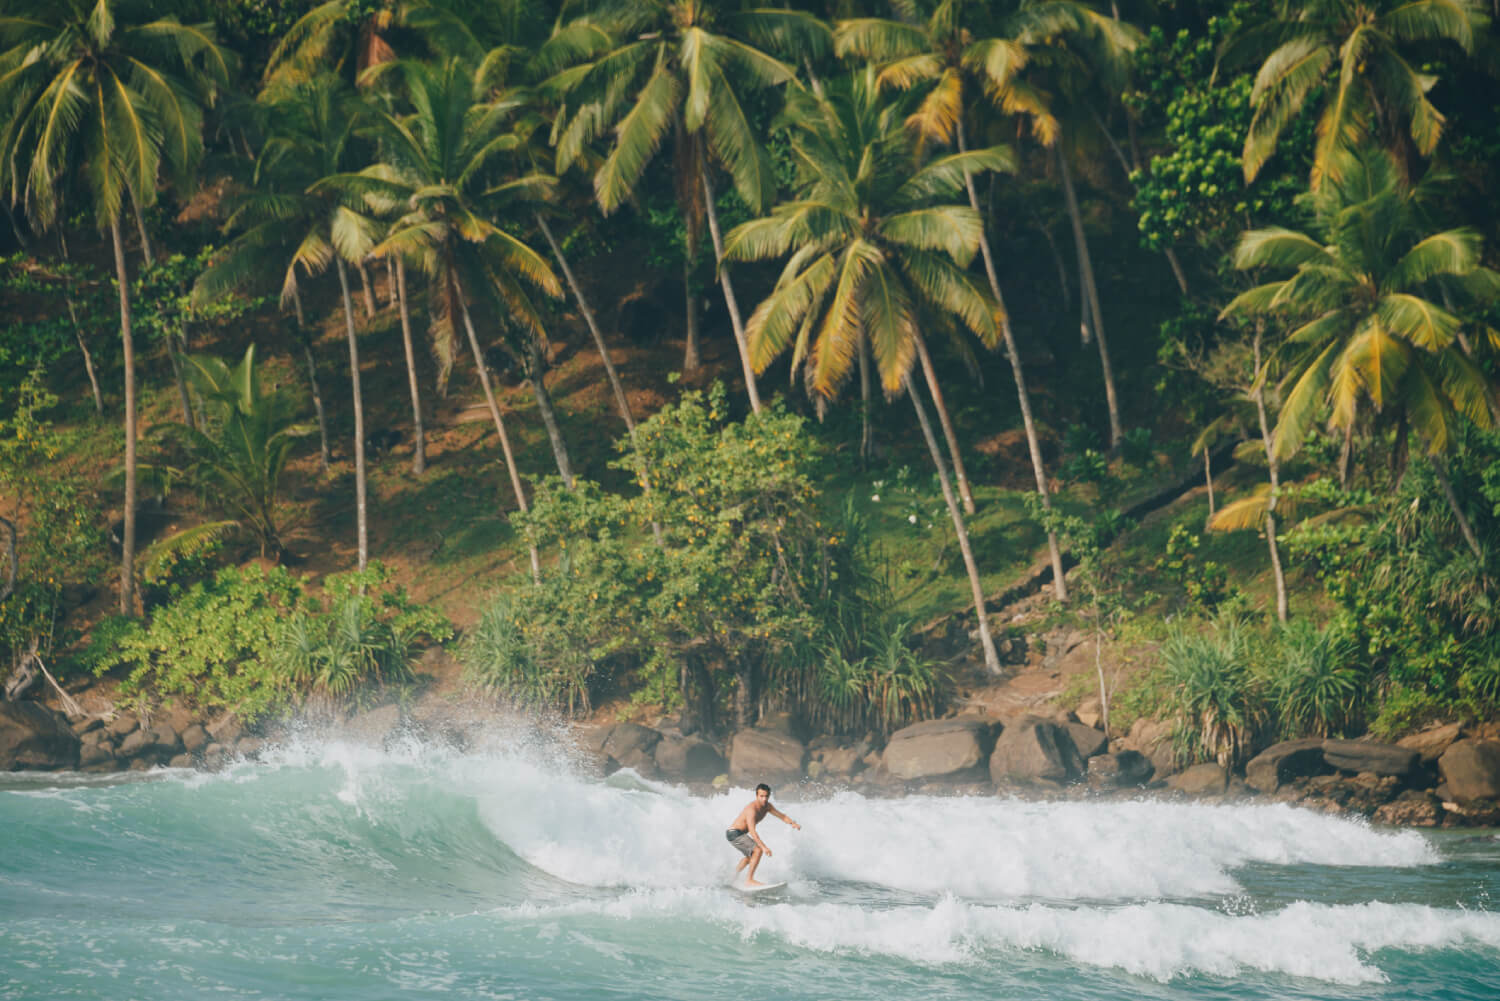 tourist surfing at the beach in Sri Lanka